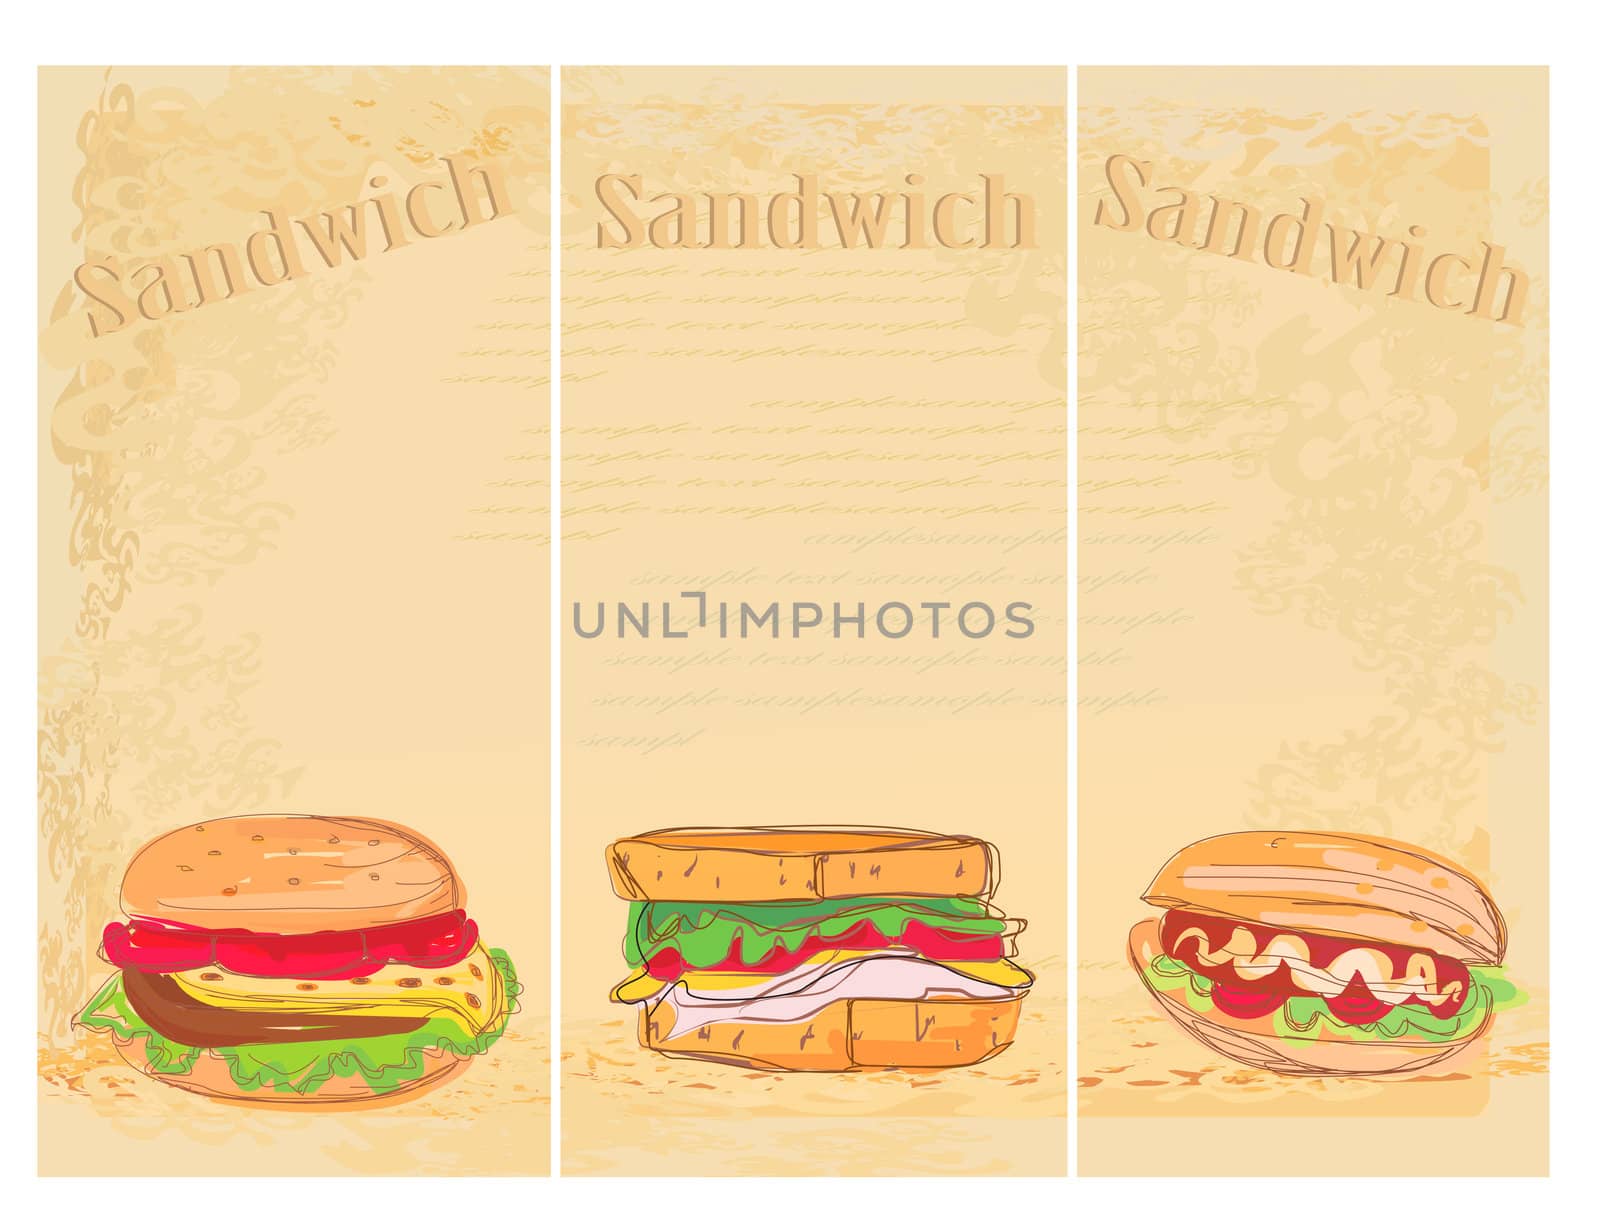 Horizontal grunge background with sandwich set